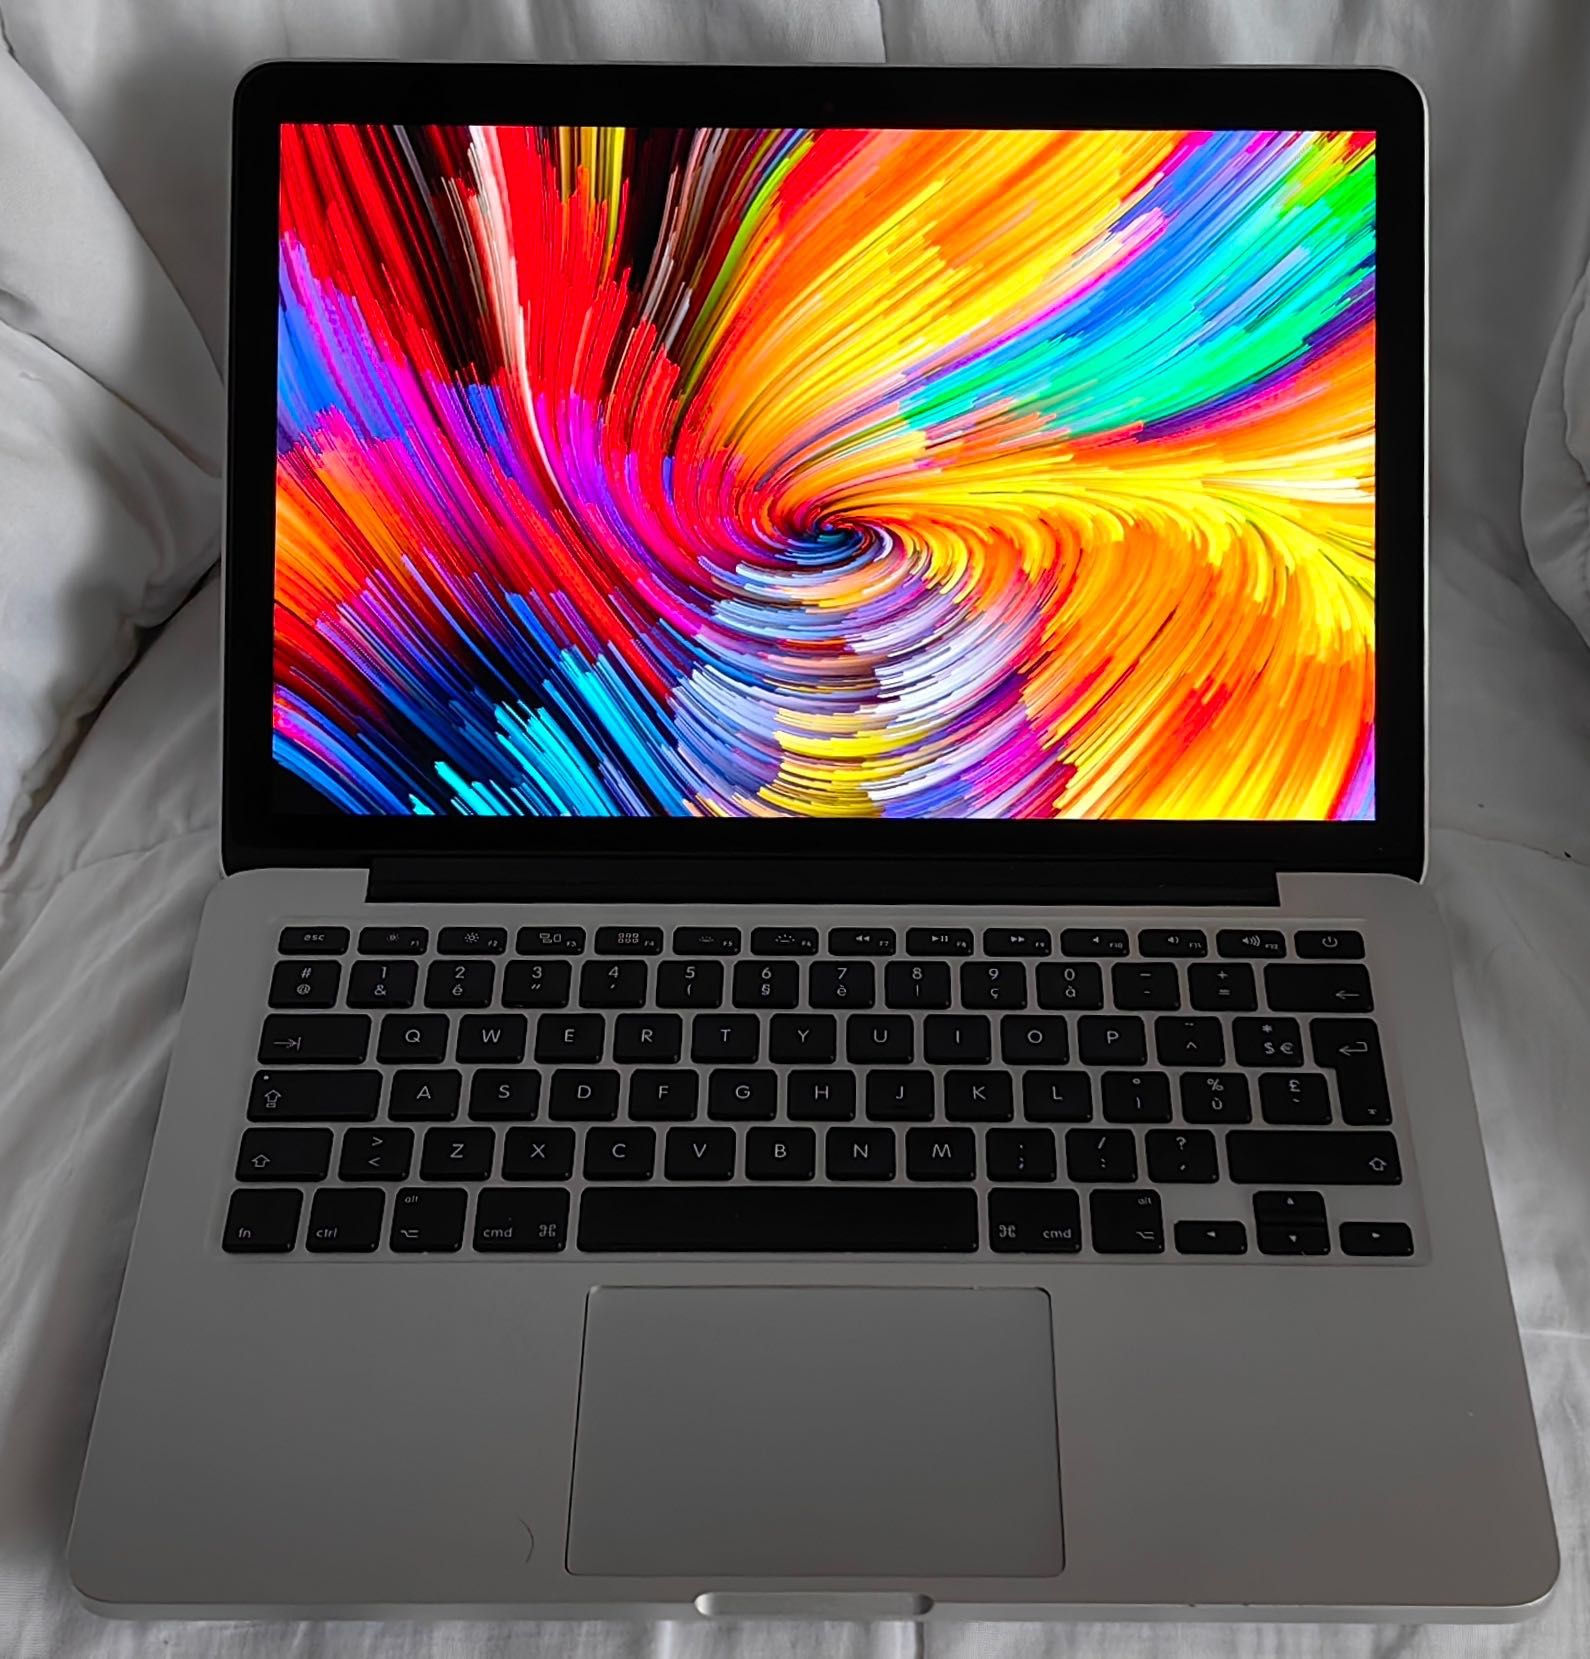 MacBook Pro 13 RETINA Intel core i7, word, excel